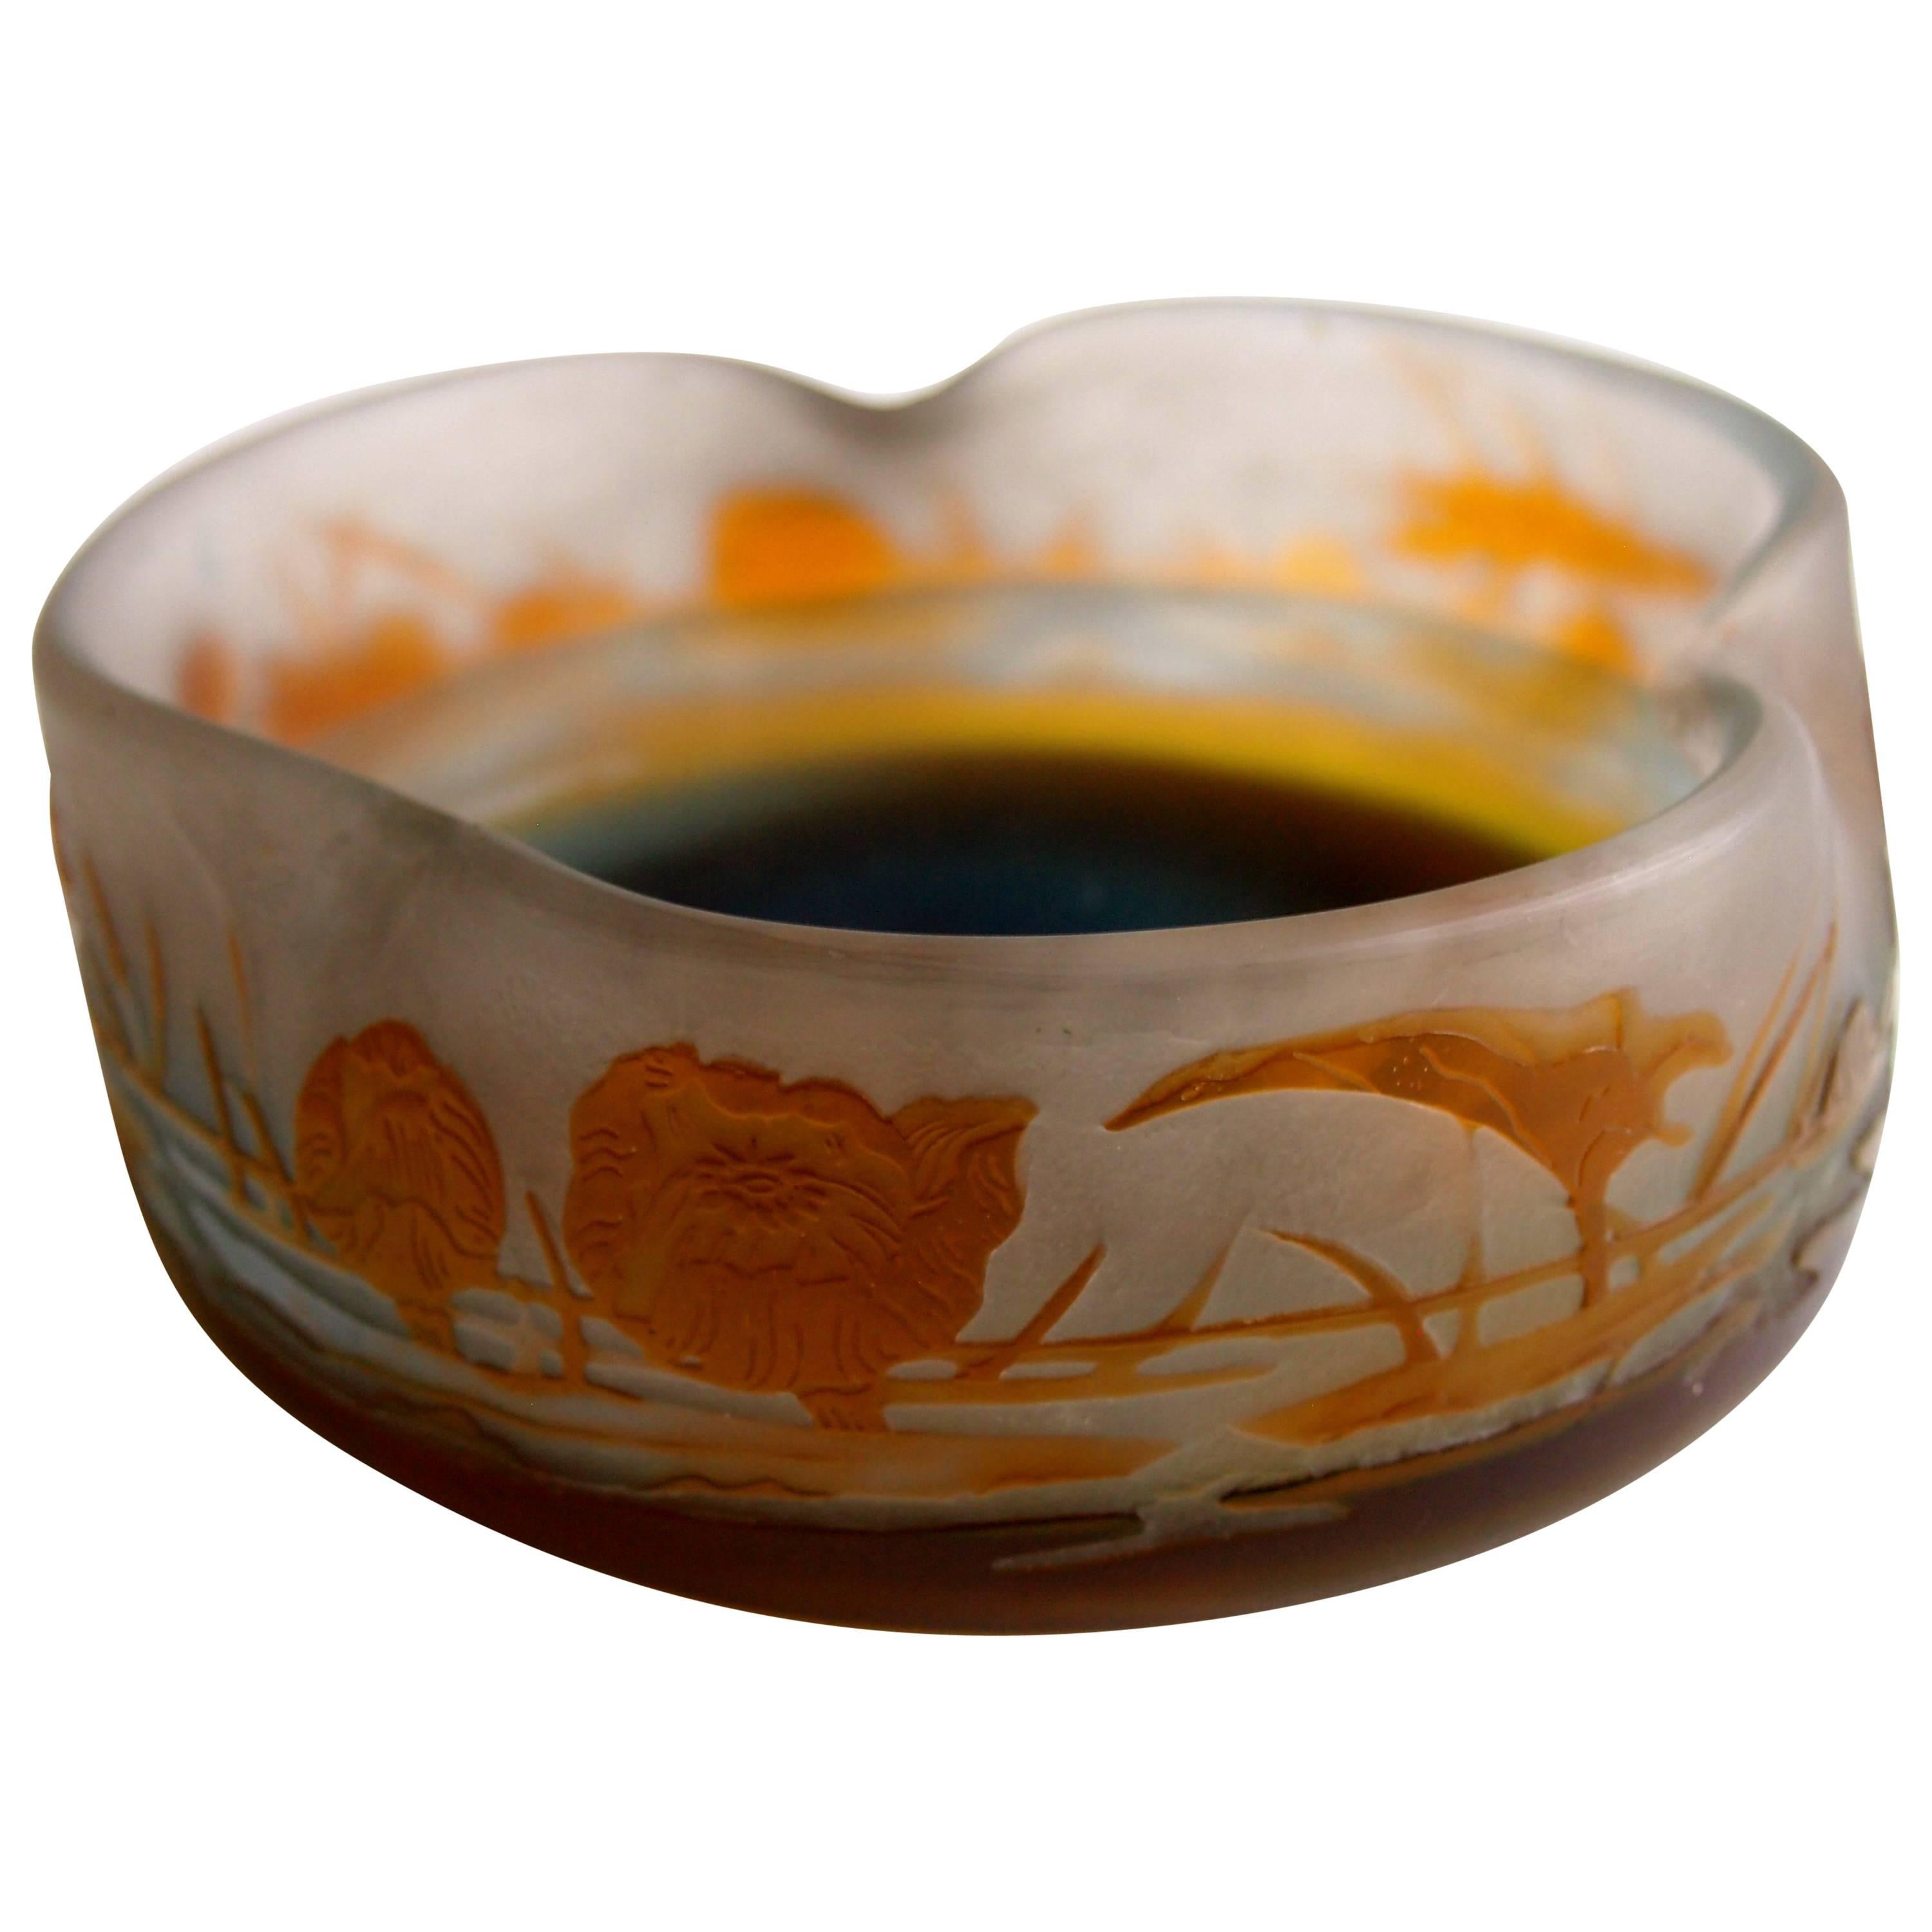 French Art Nouveau Emile Galle Cameo Glass Aquatic Bowl c1900 For Sale